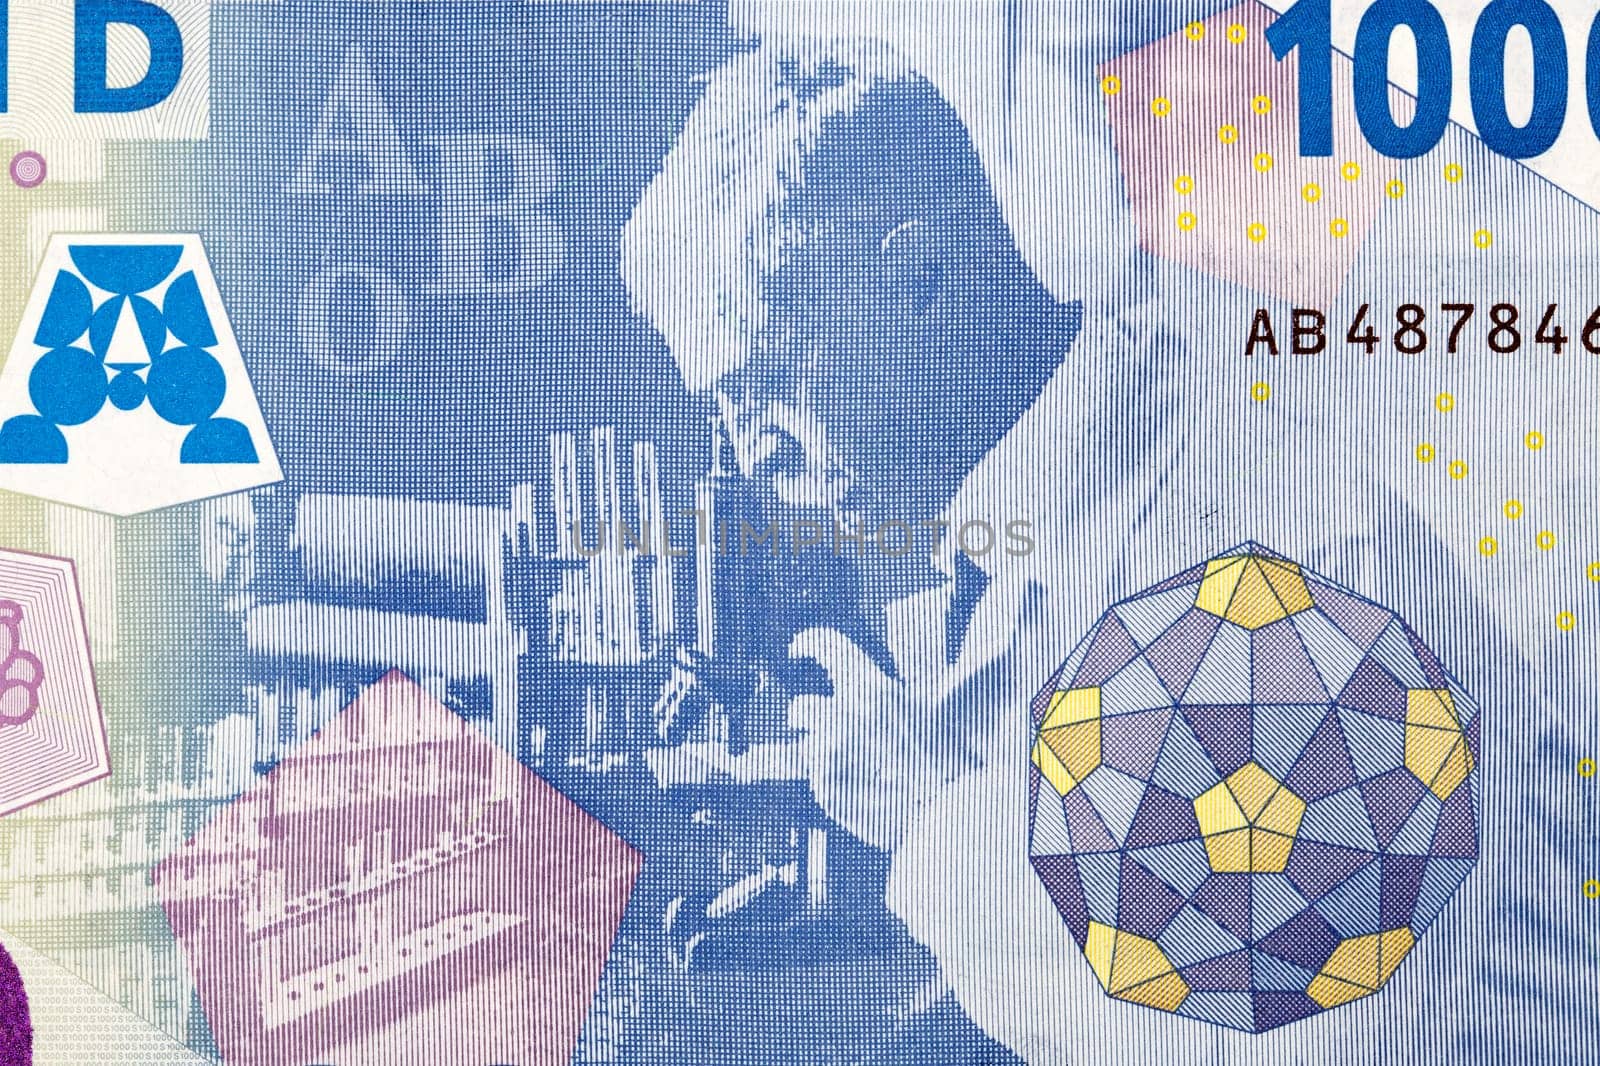 Karl Landsteiner working in his laboratory in Licenter from money by johan10